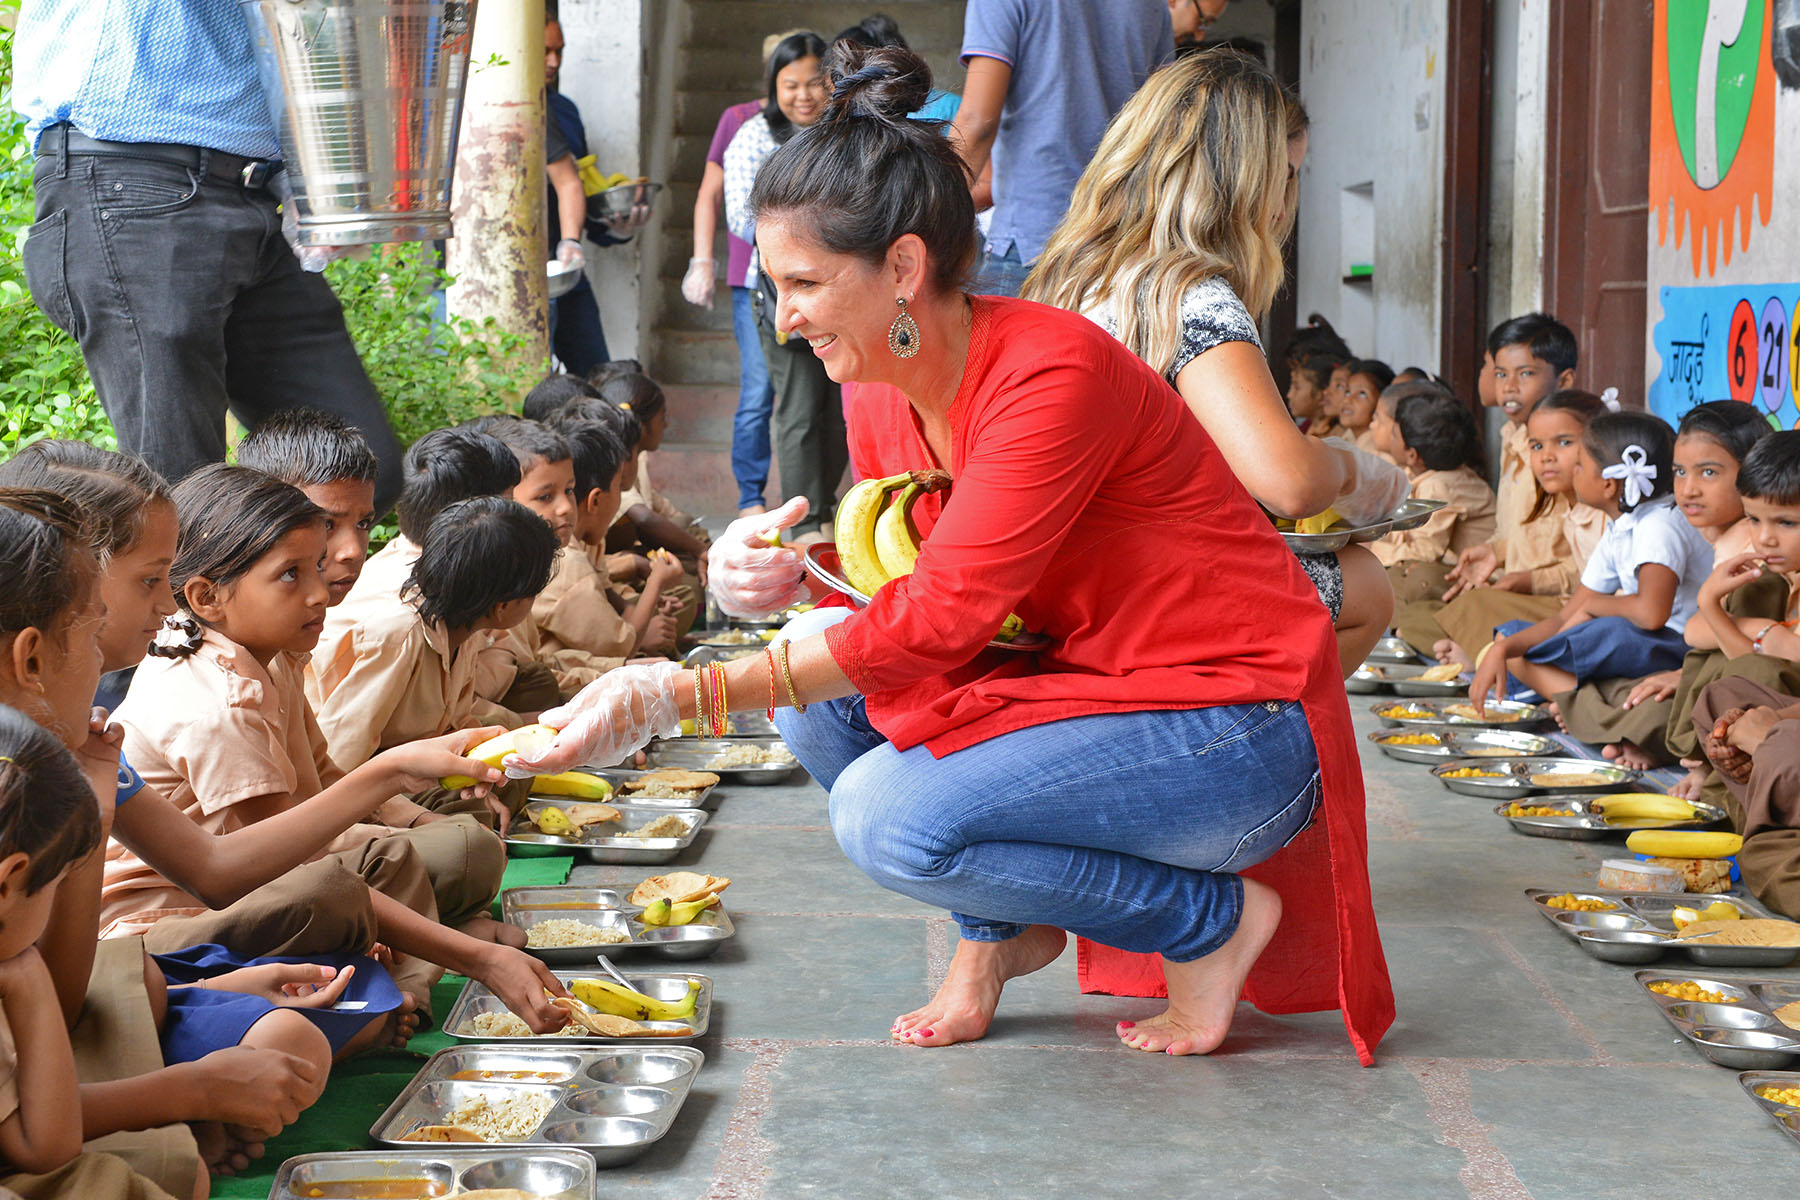 Shop LC employees help serve meals to schoolchildren in India.